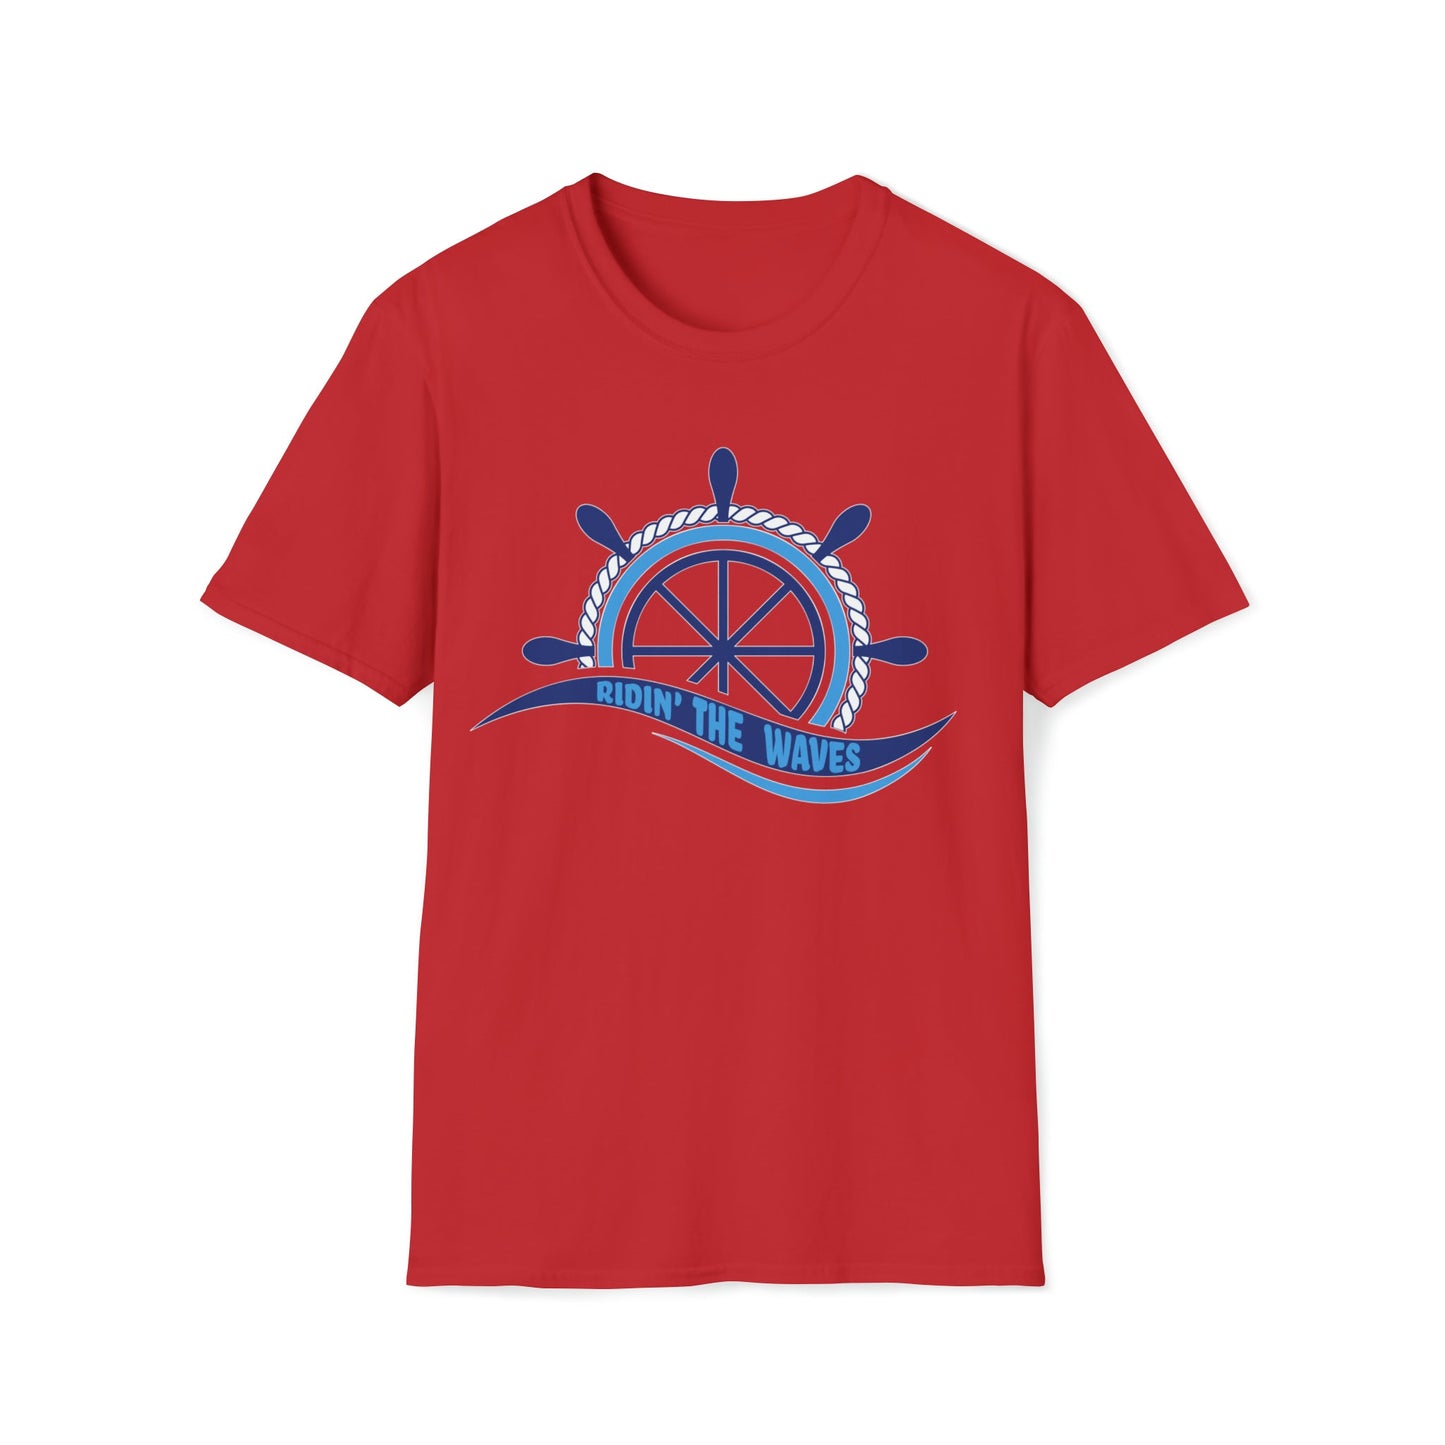 Ridin' the Waves - Unisex Softstyle T-Shirt - Ohio Custom Designs & Apparel LLC